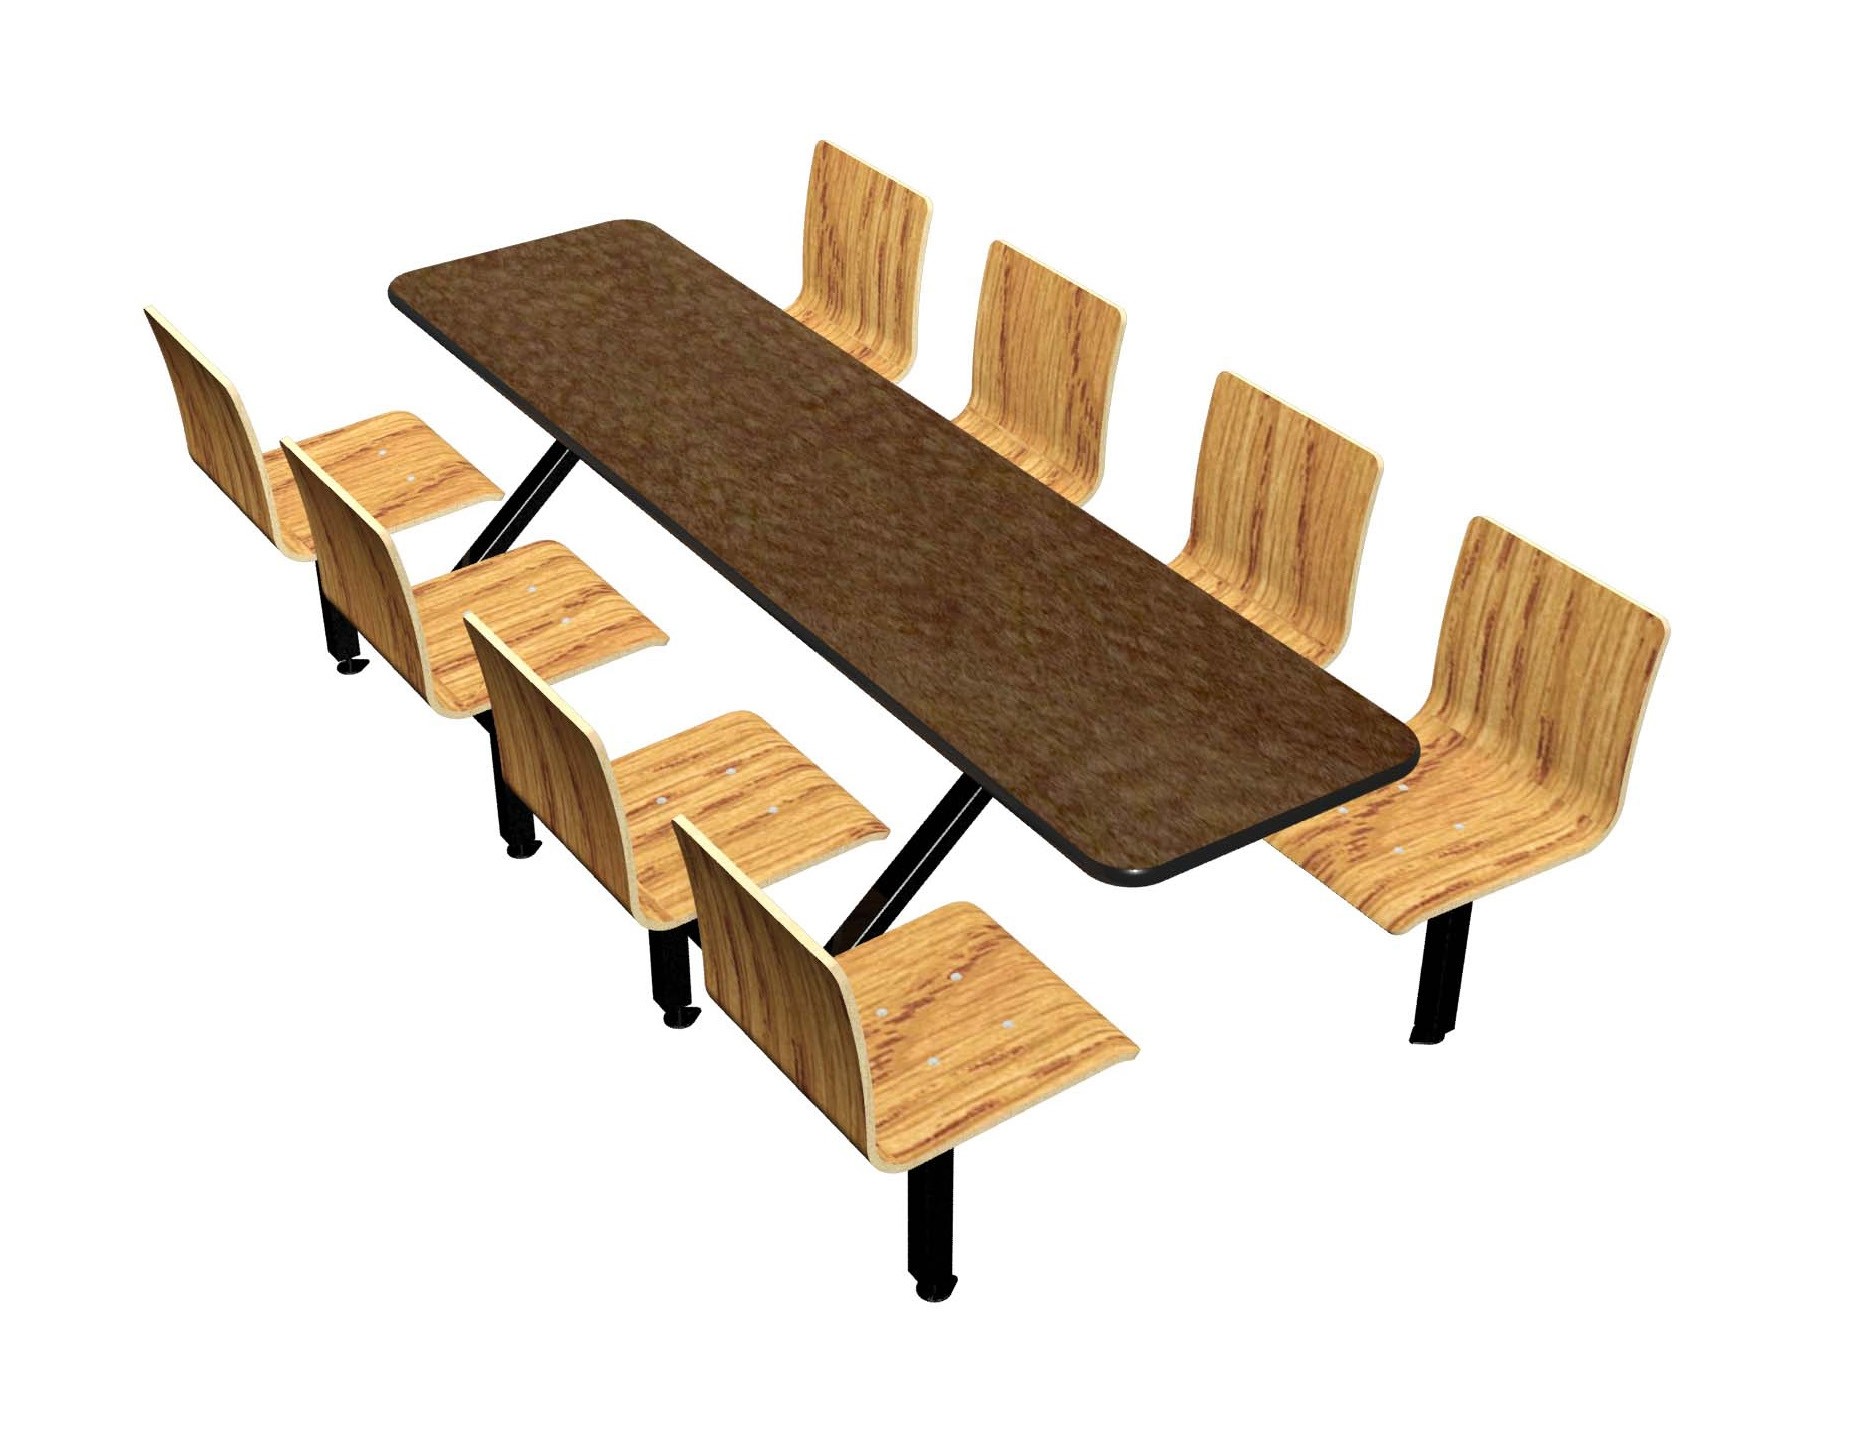 Morro Zephyr laminate table, Black vinyl edge, Natural Oak laminate chairhead